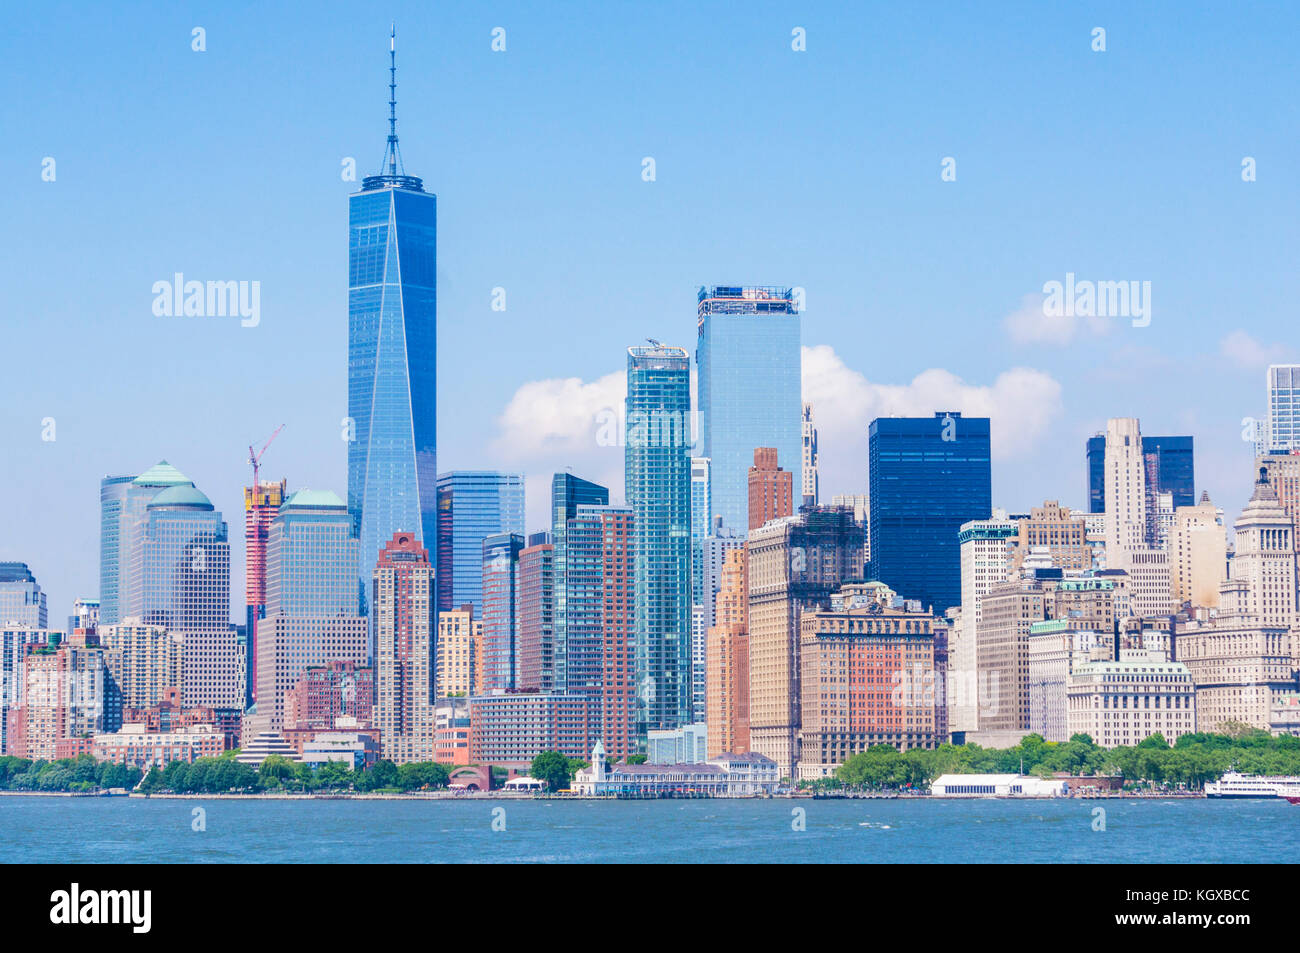 Skyline di New York City usa new york skyline skyline di manhattan con grattacieli tra cui la Freedom Tower Lower Manhattan island cbd new york stati uniti d'America Foto Stock